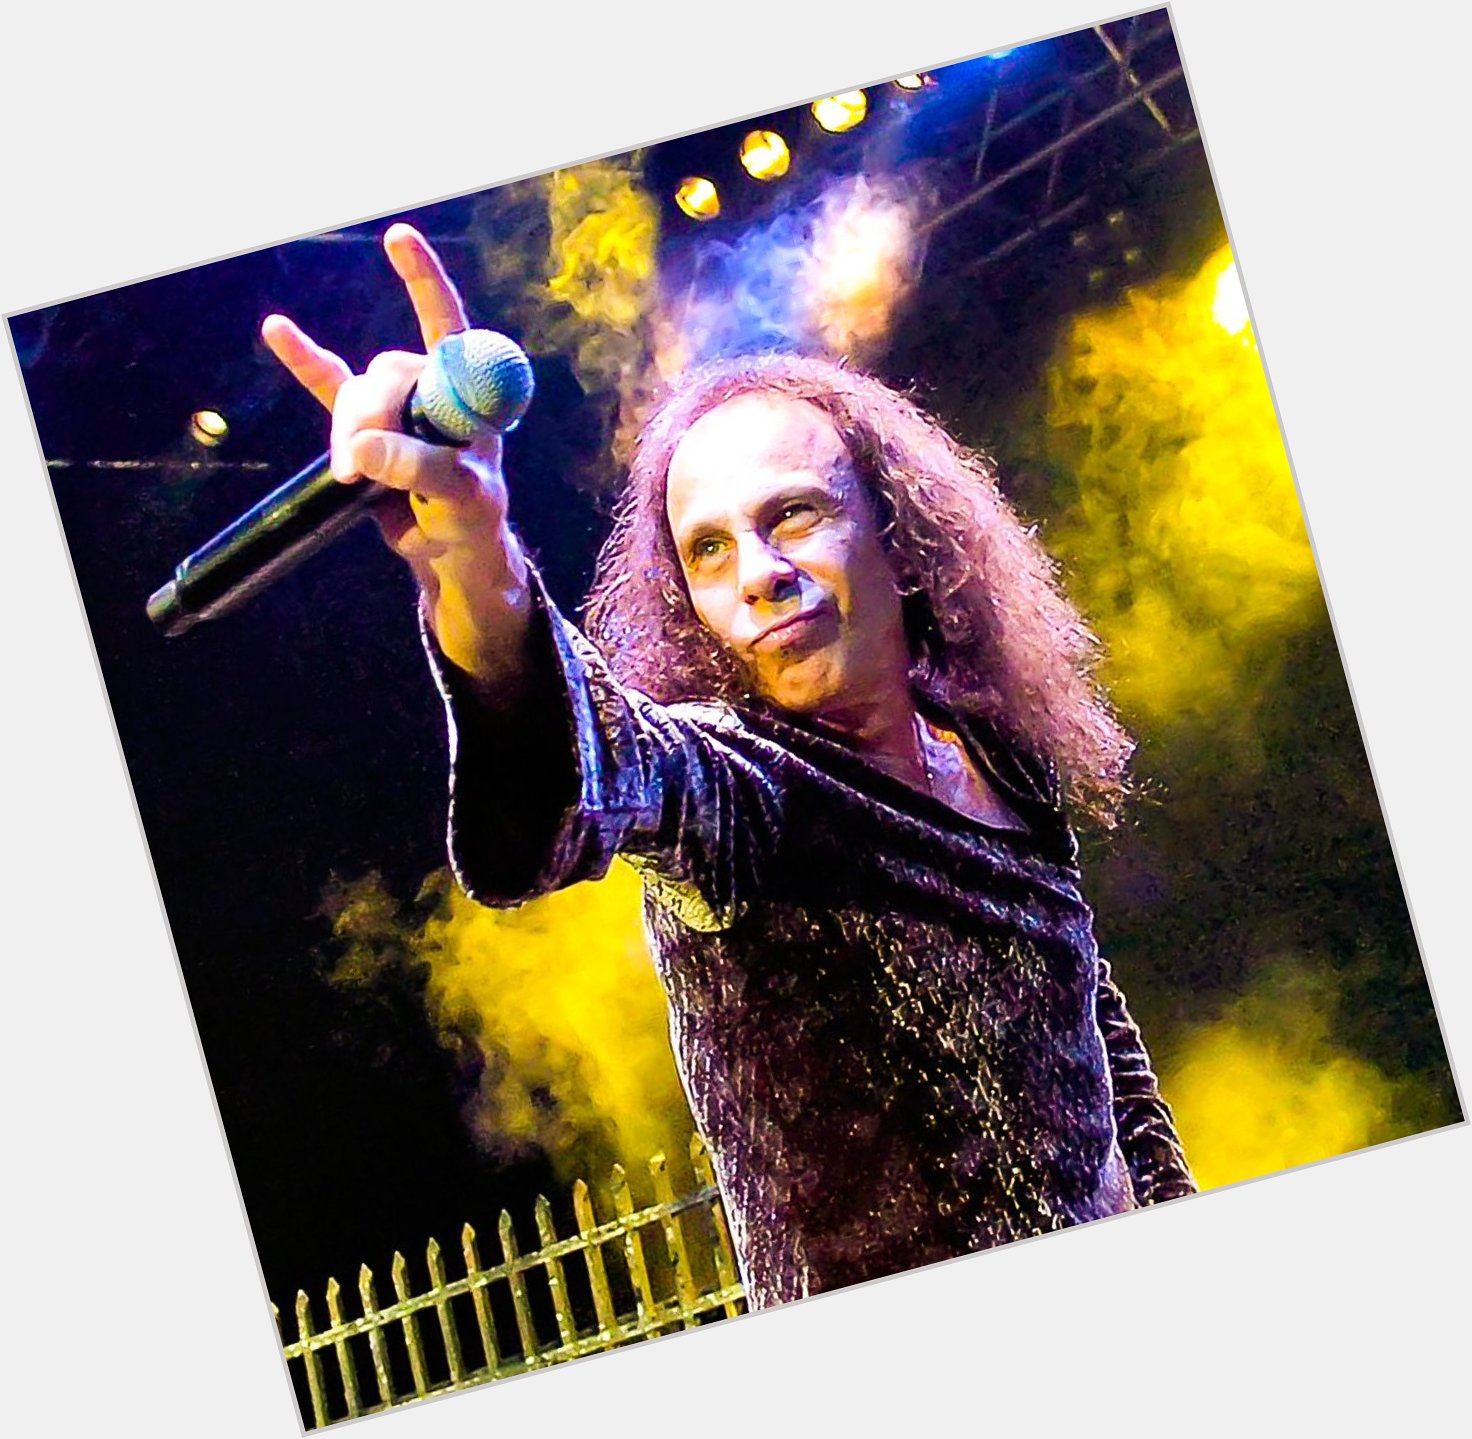 Happy Heavenly Birthday, Ronnie James Dio! 